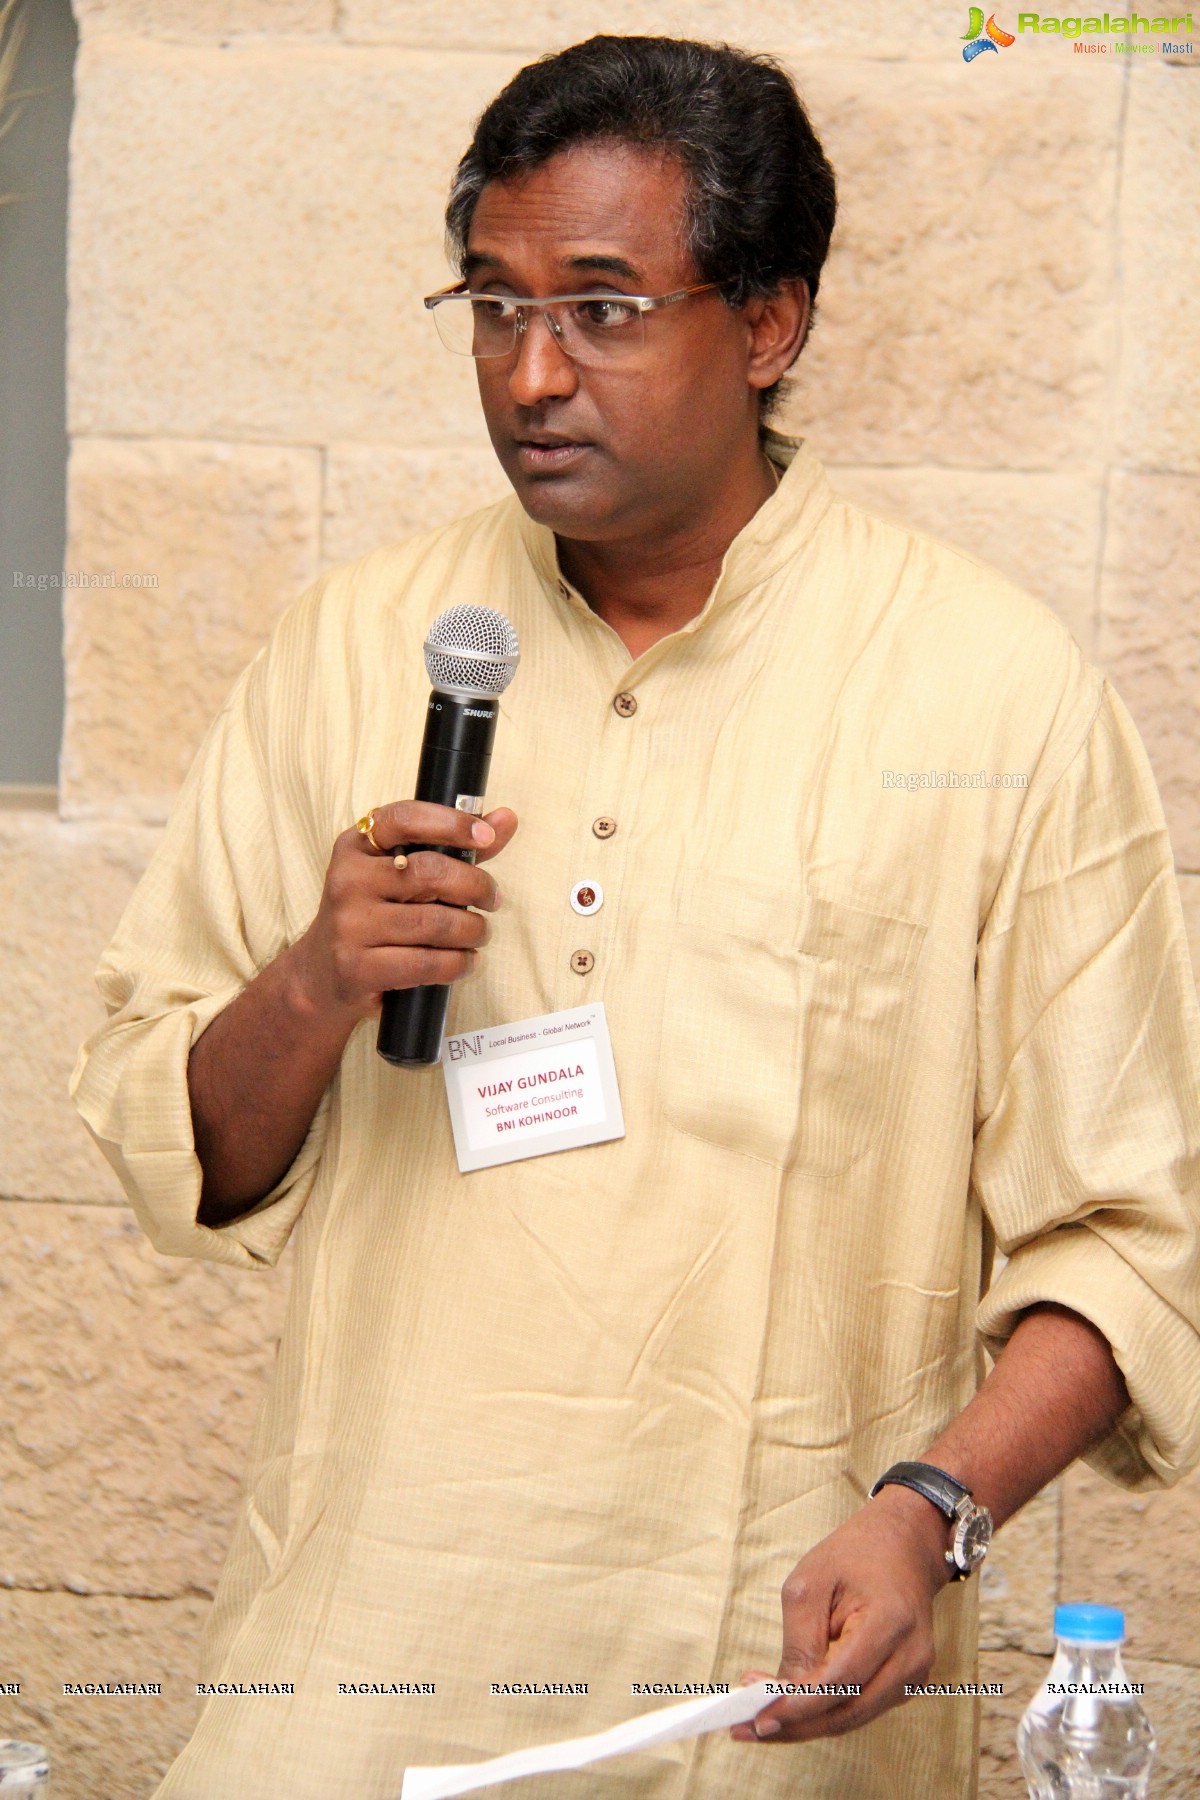 BNI Kohinoor Meet (August 13, 2014) at Fortune Vallabha, Hyderabad